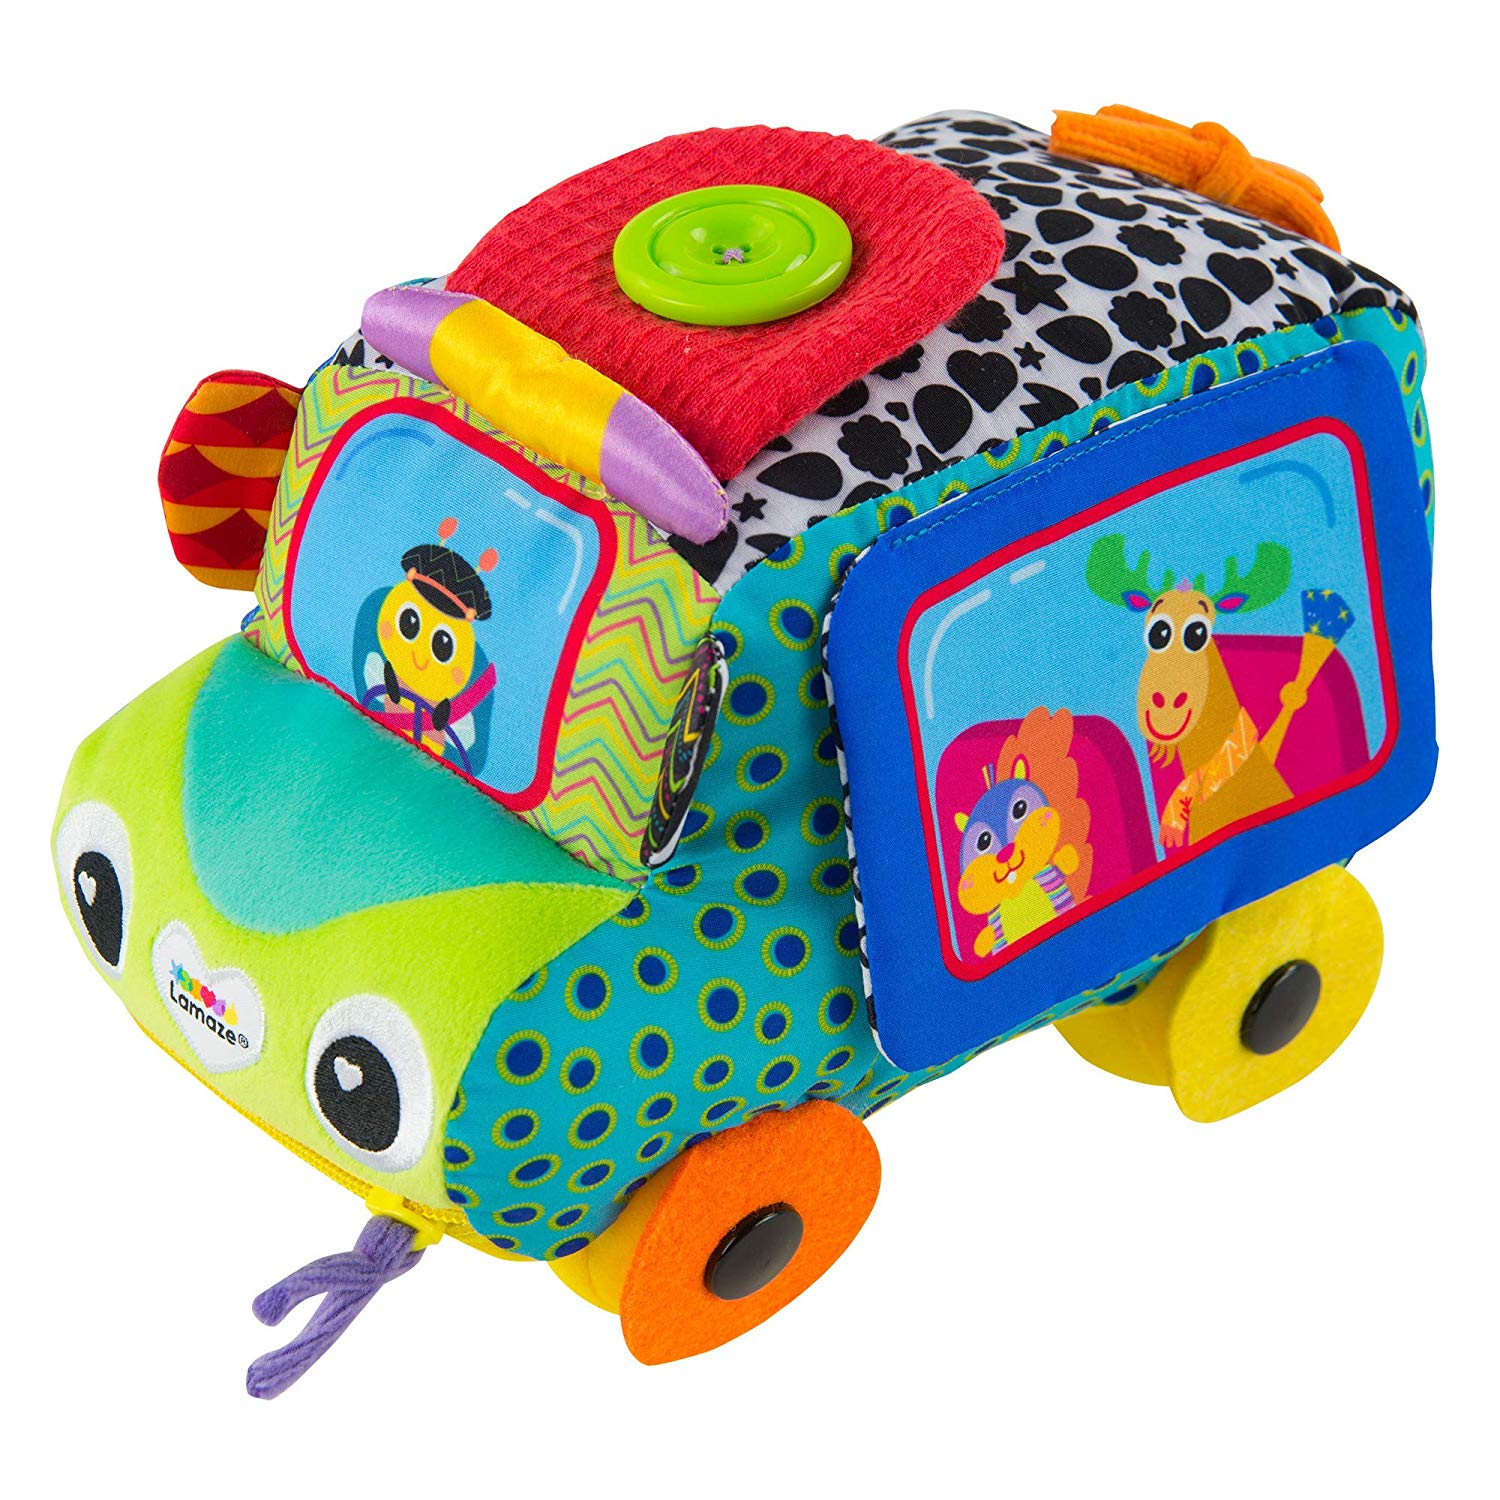 Tomy L27180 Plush Toy Multi-Coloured